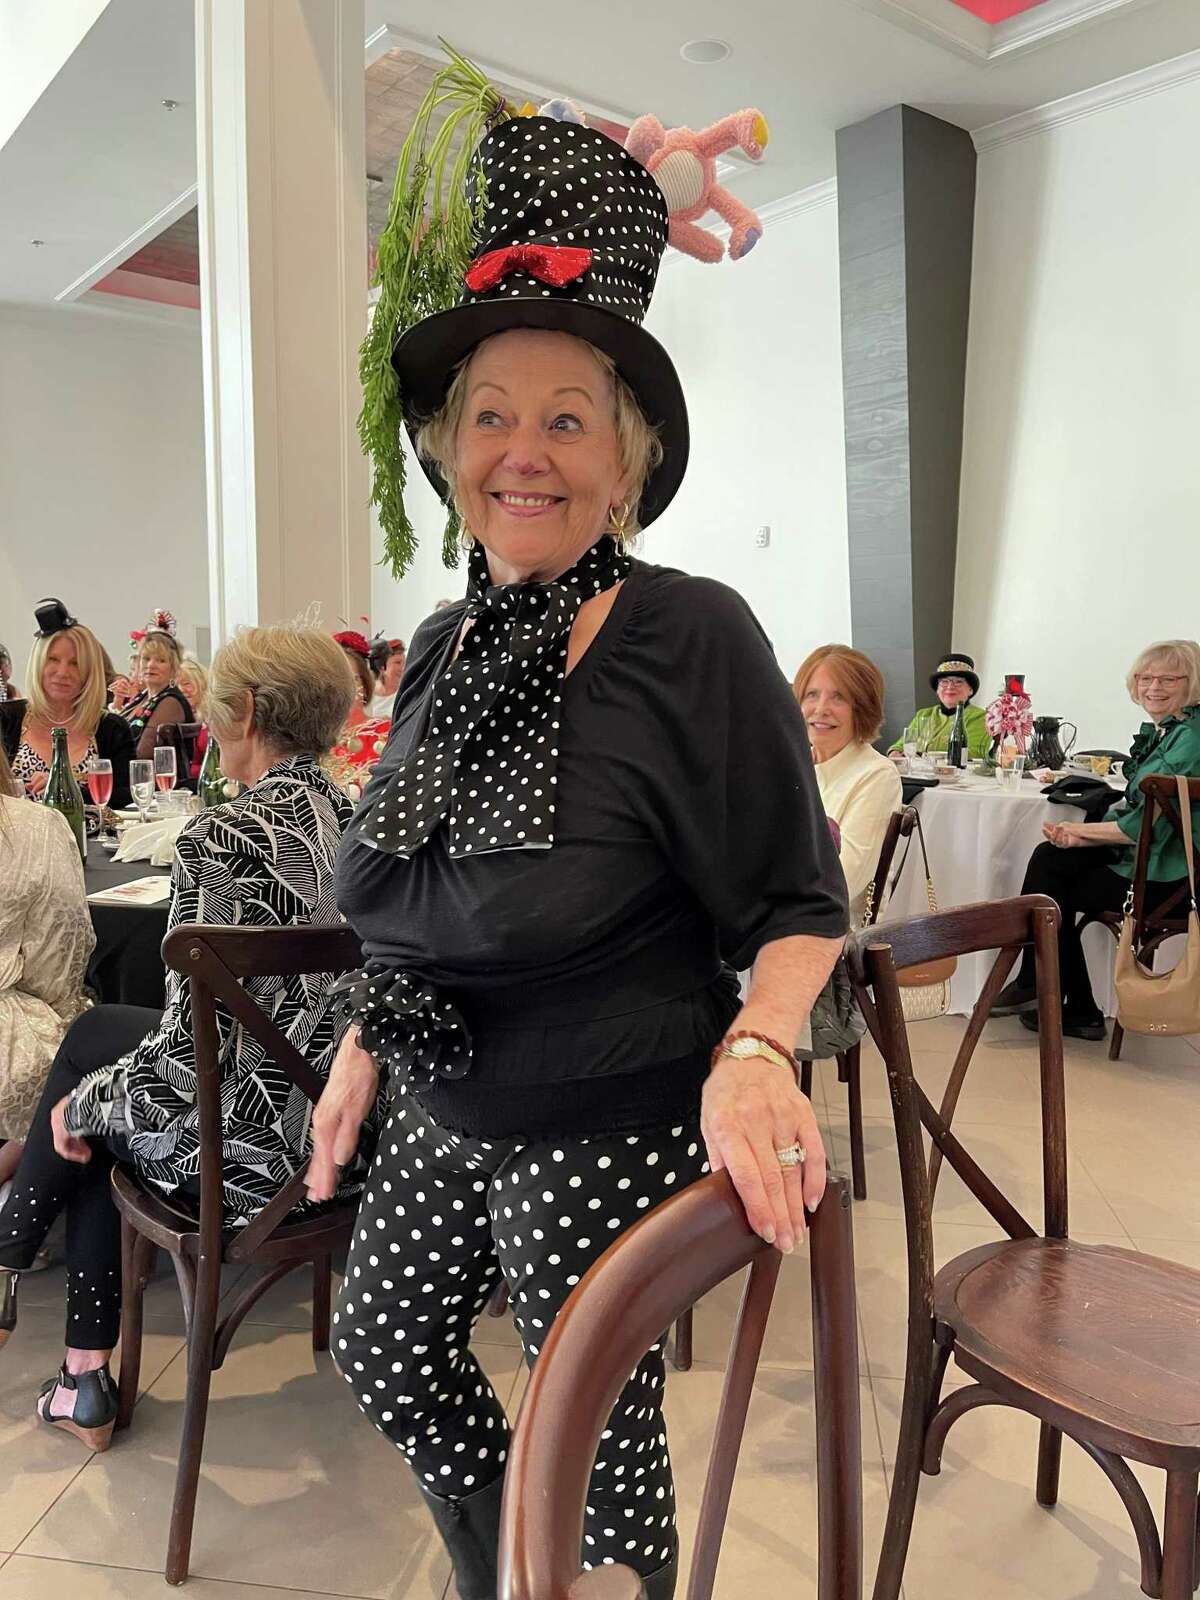 Mary Ann Carson won the “Silliest Hat” at the tea.